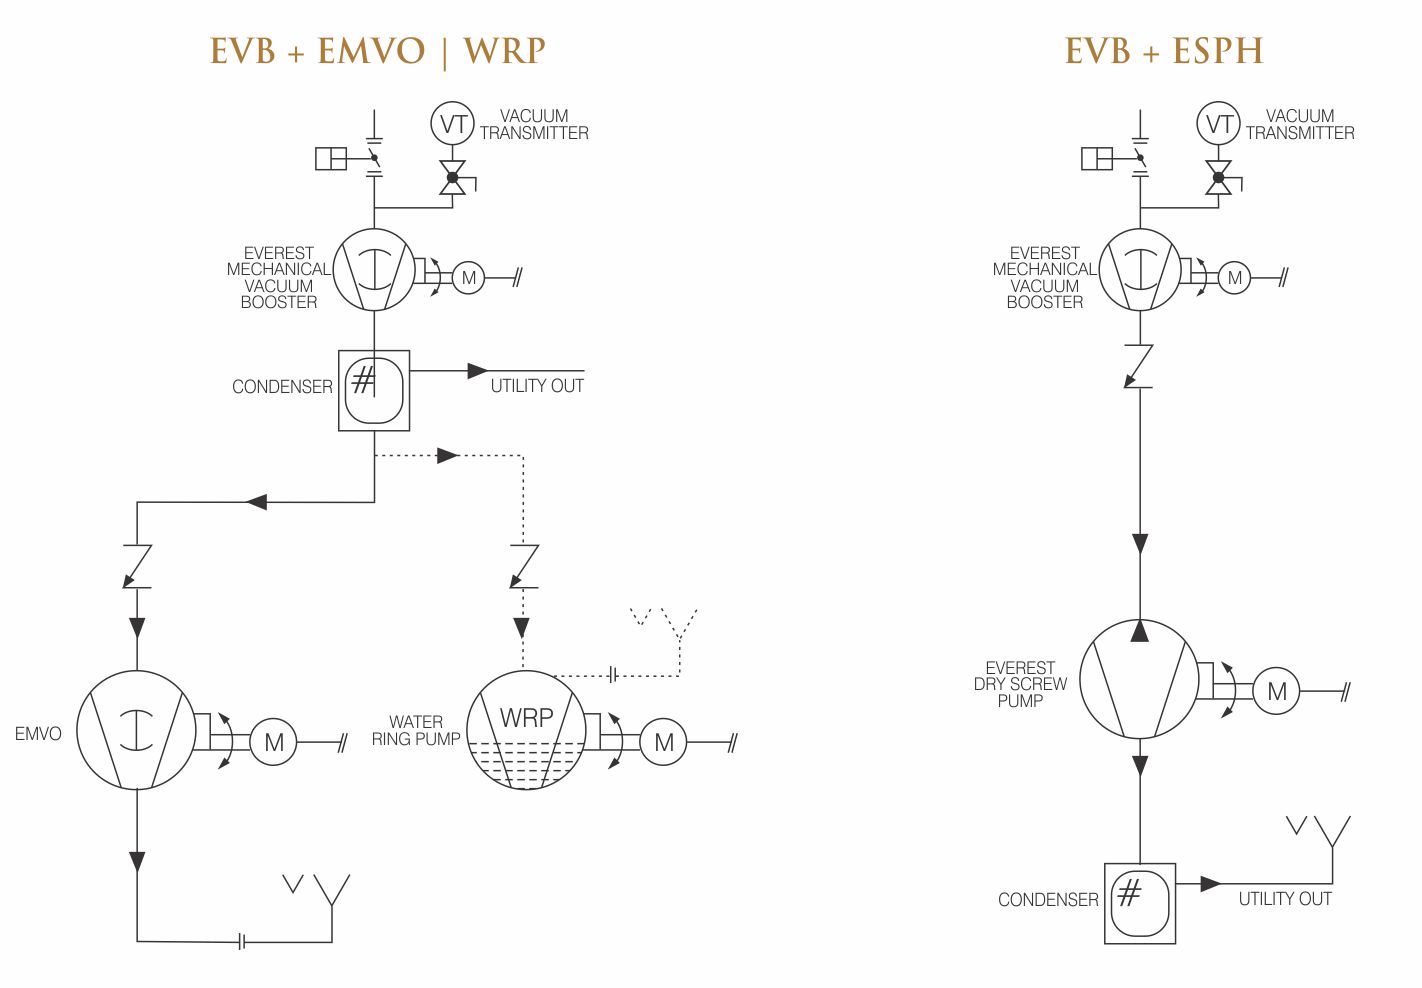 Dry Screw Pumps EVB EMVO WRP